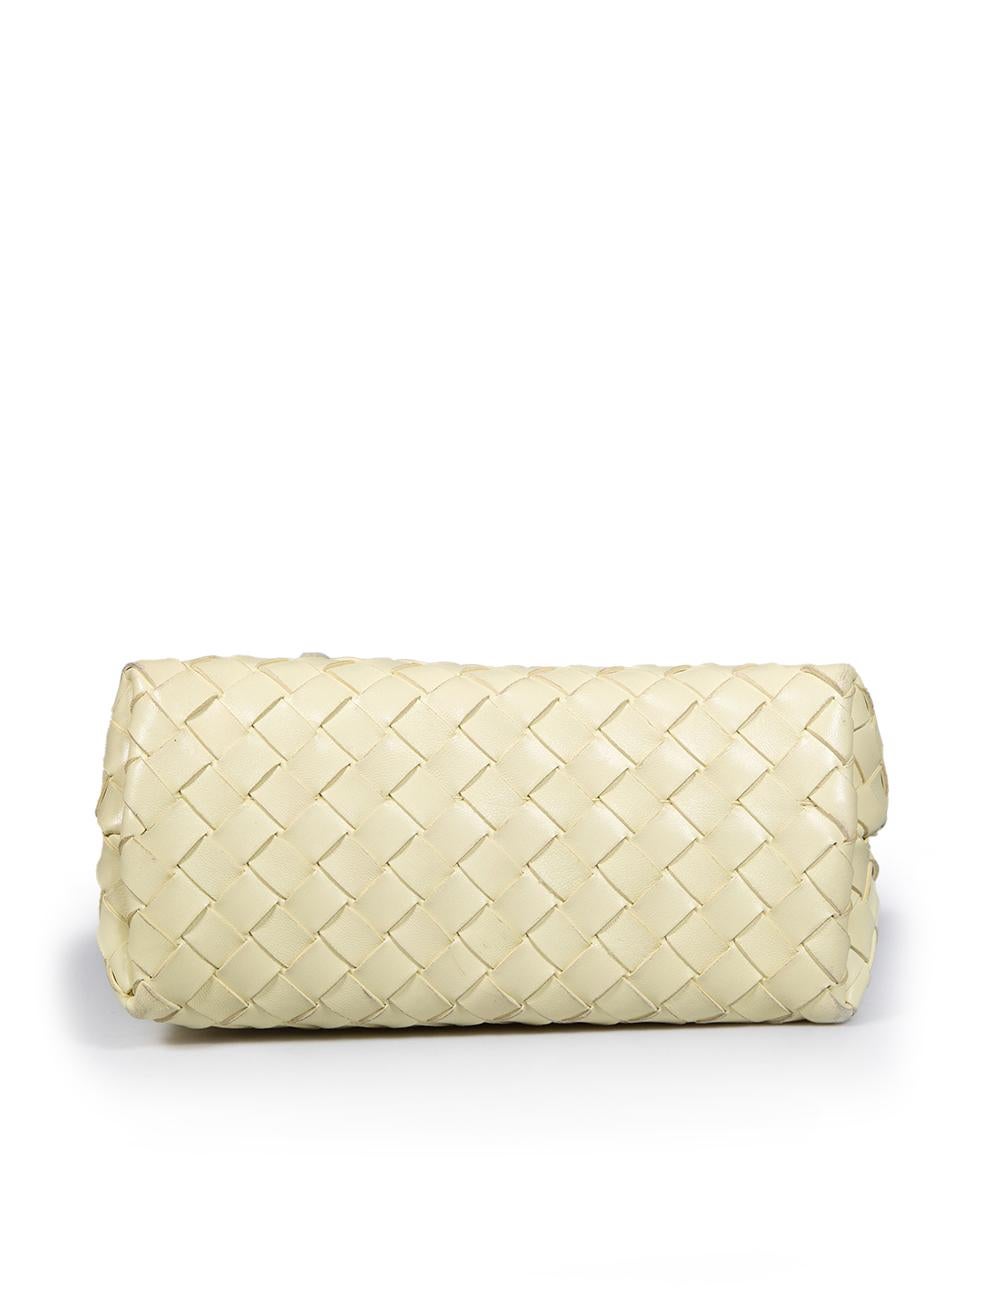 Women's Bottega Veneta Yellow Leather Small Andiamo Top Handle Bag For Sale